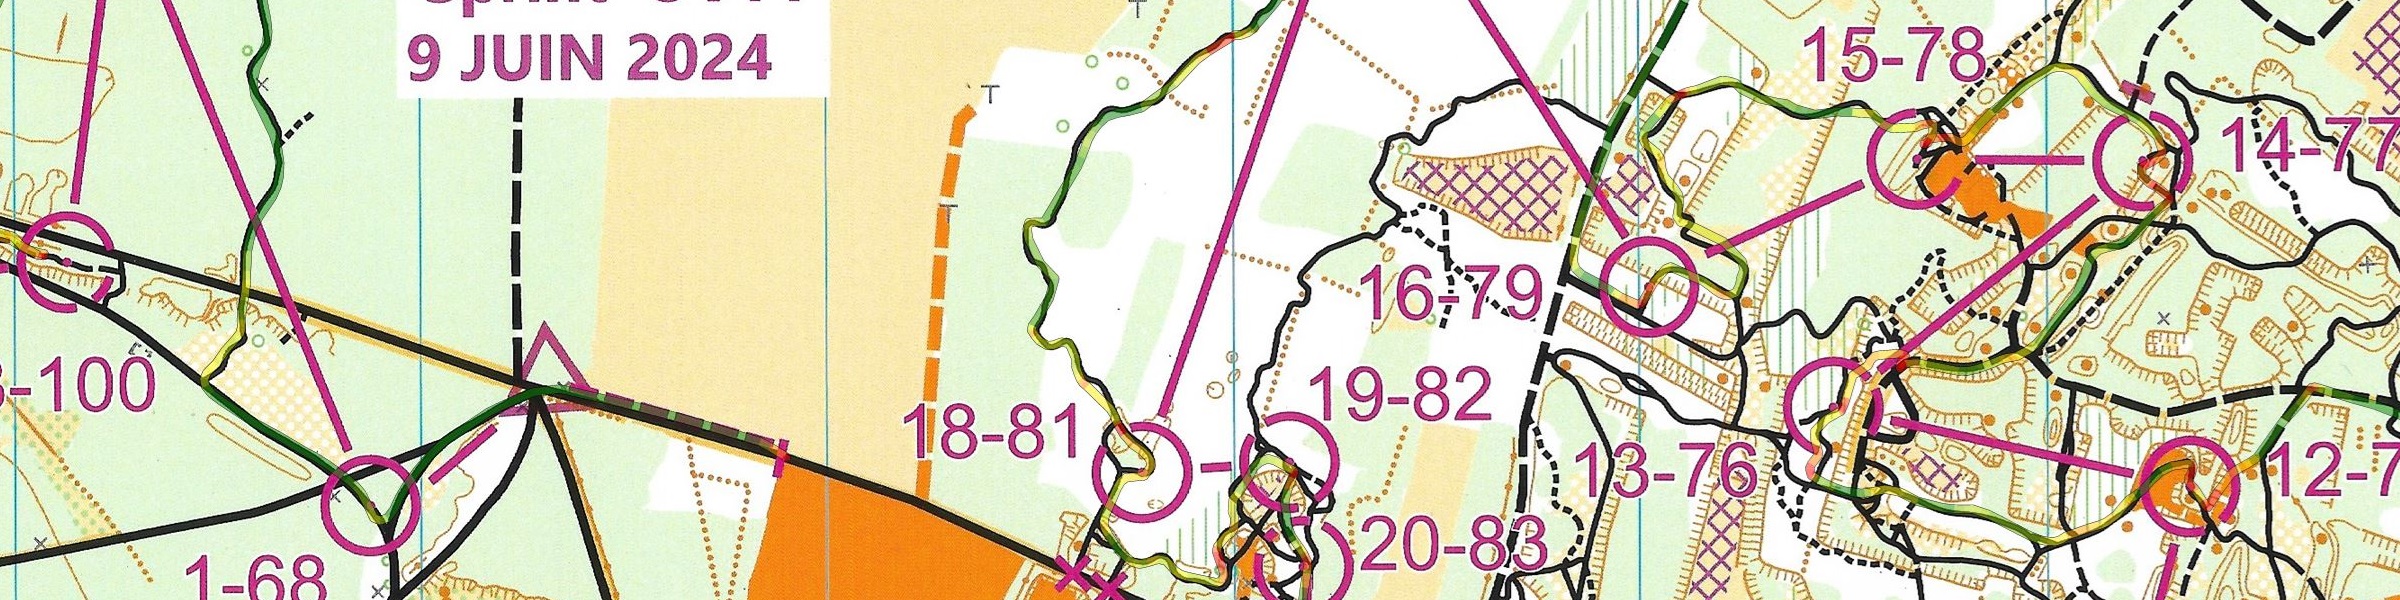 Régionale O'VTT Sprint (09.06.2024)